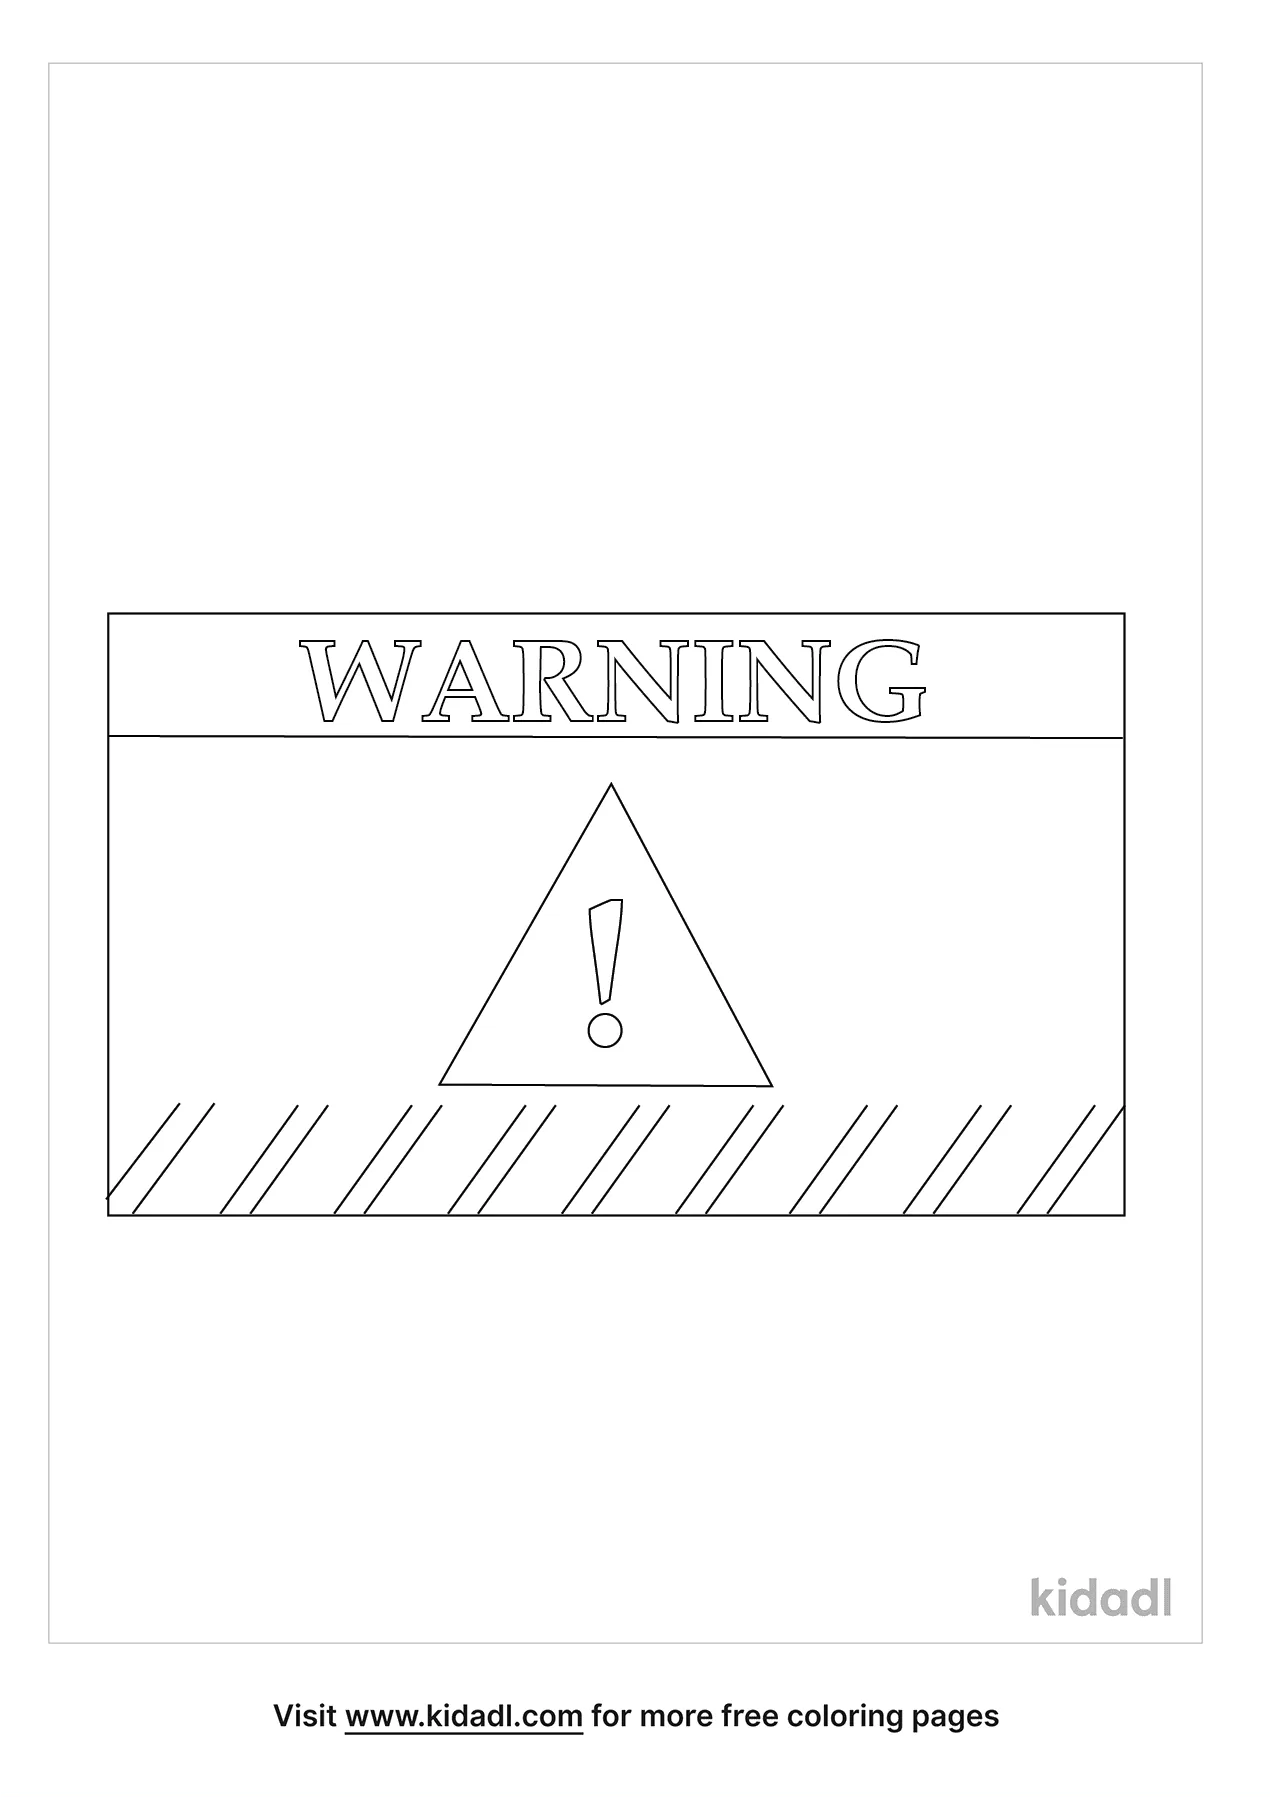 Warning Coloring Page